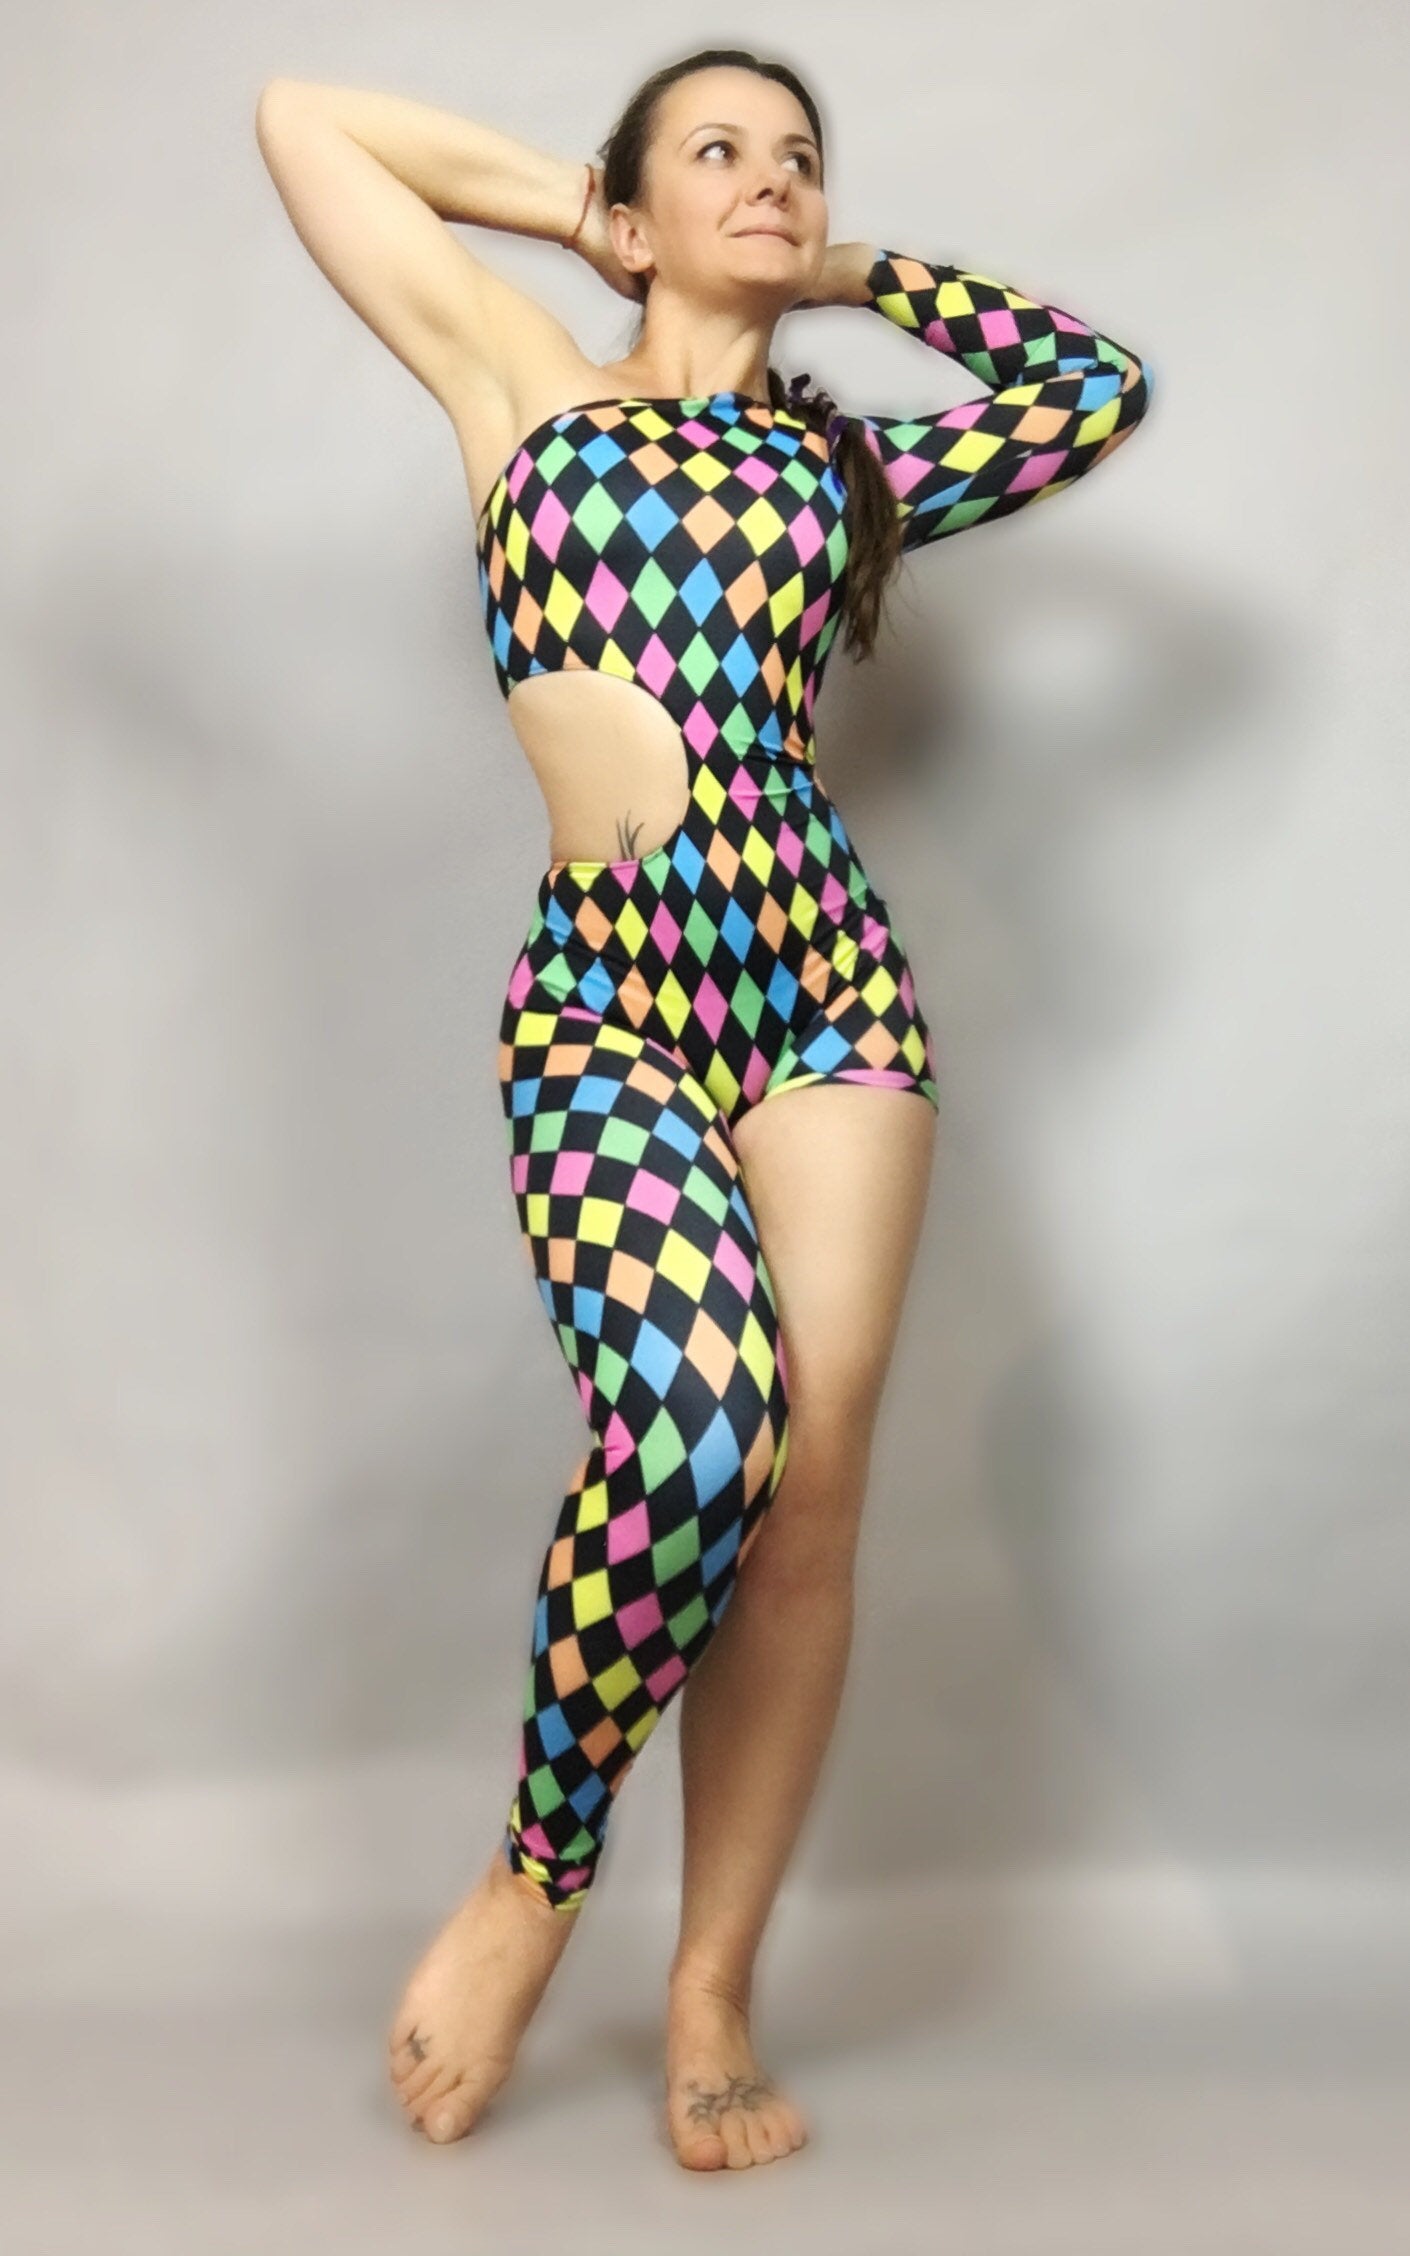 Harlequin Costume, Contortion Leotard, Spandex Jumpsuit, Bodysuit for Women or Men, Exotic Dancewear